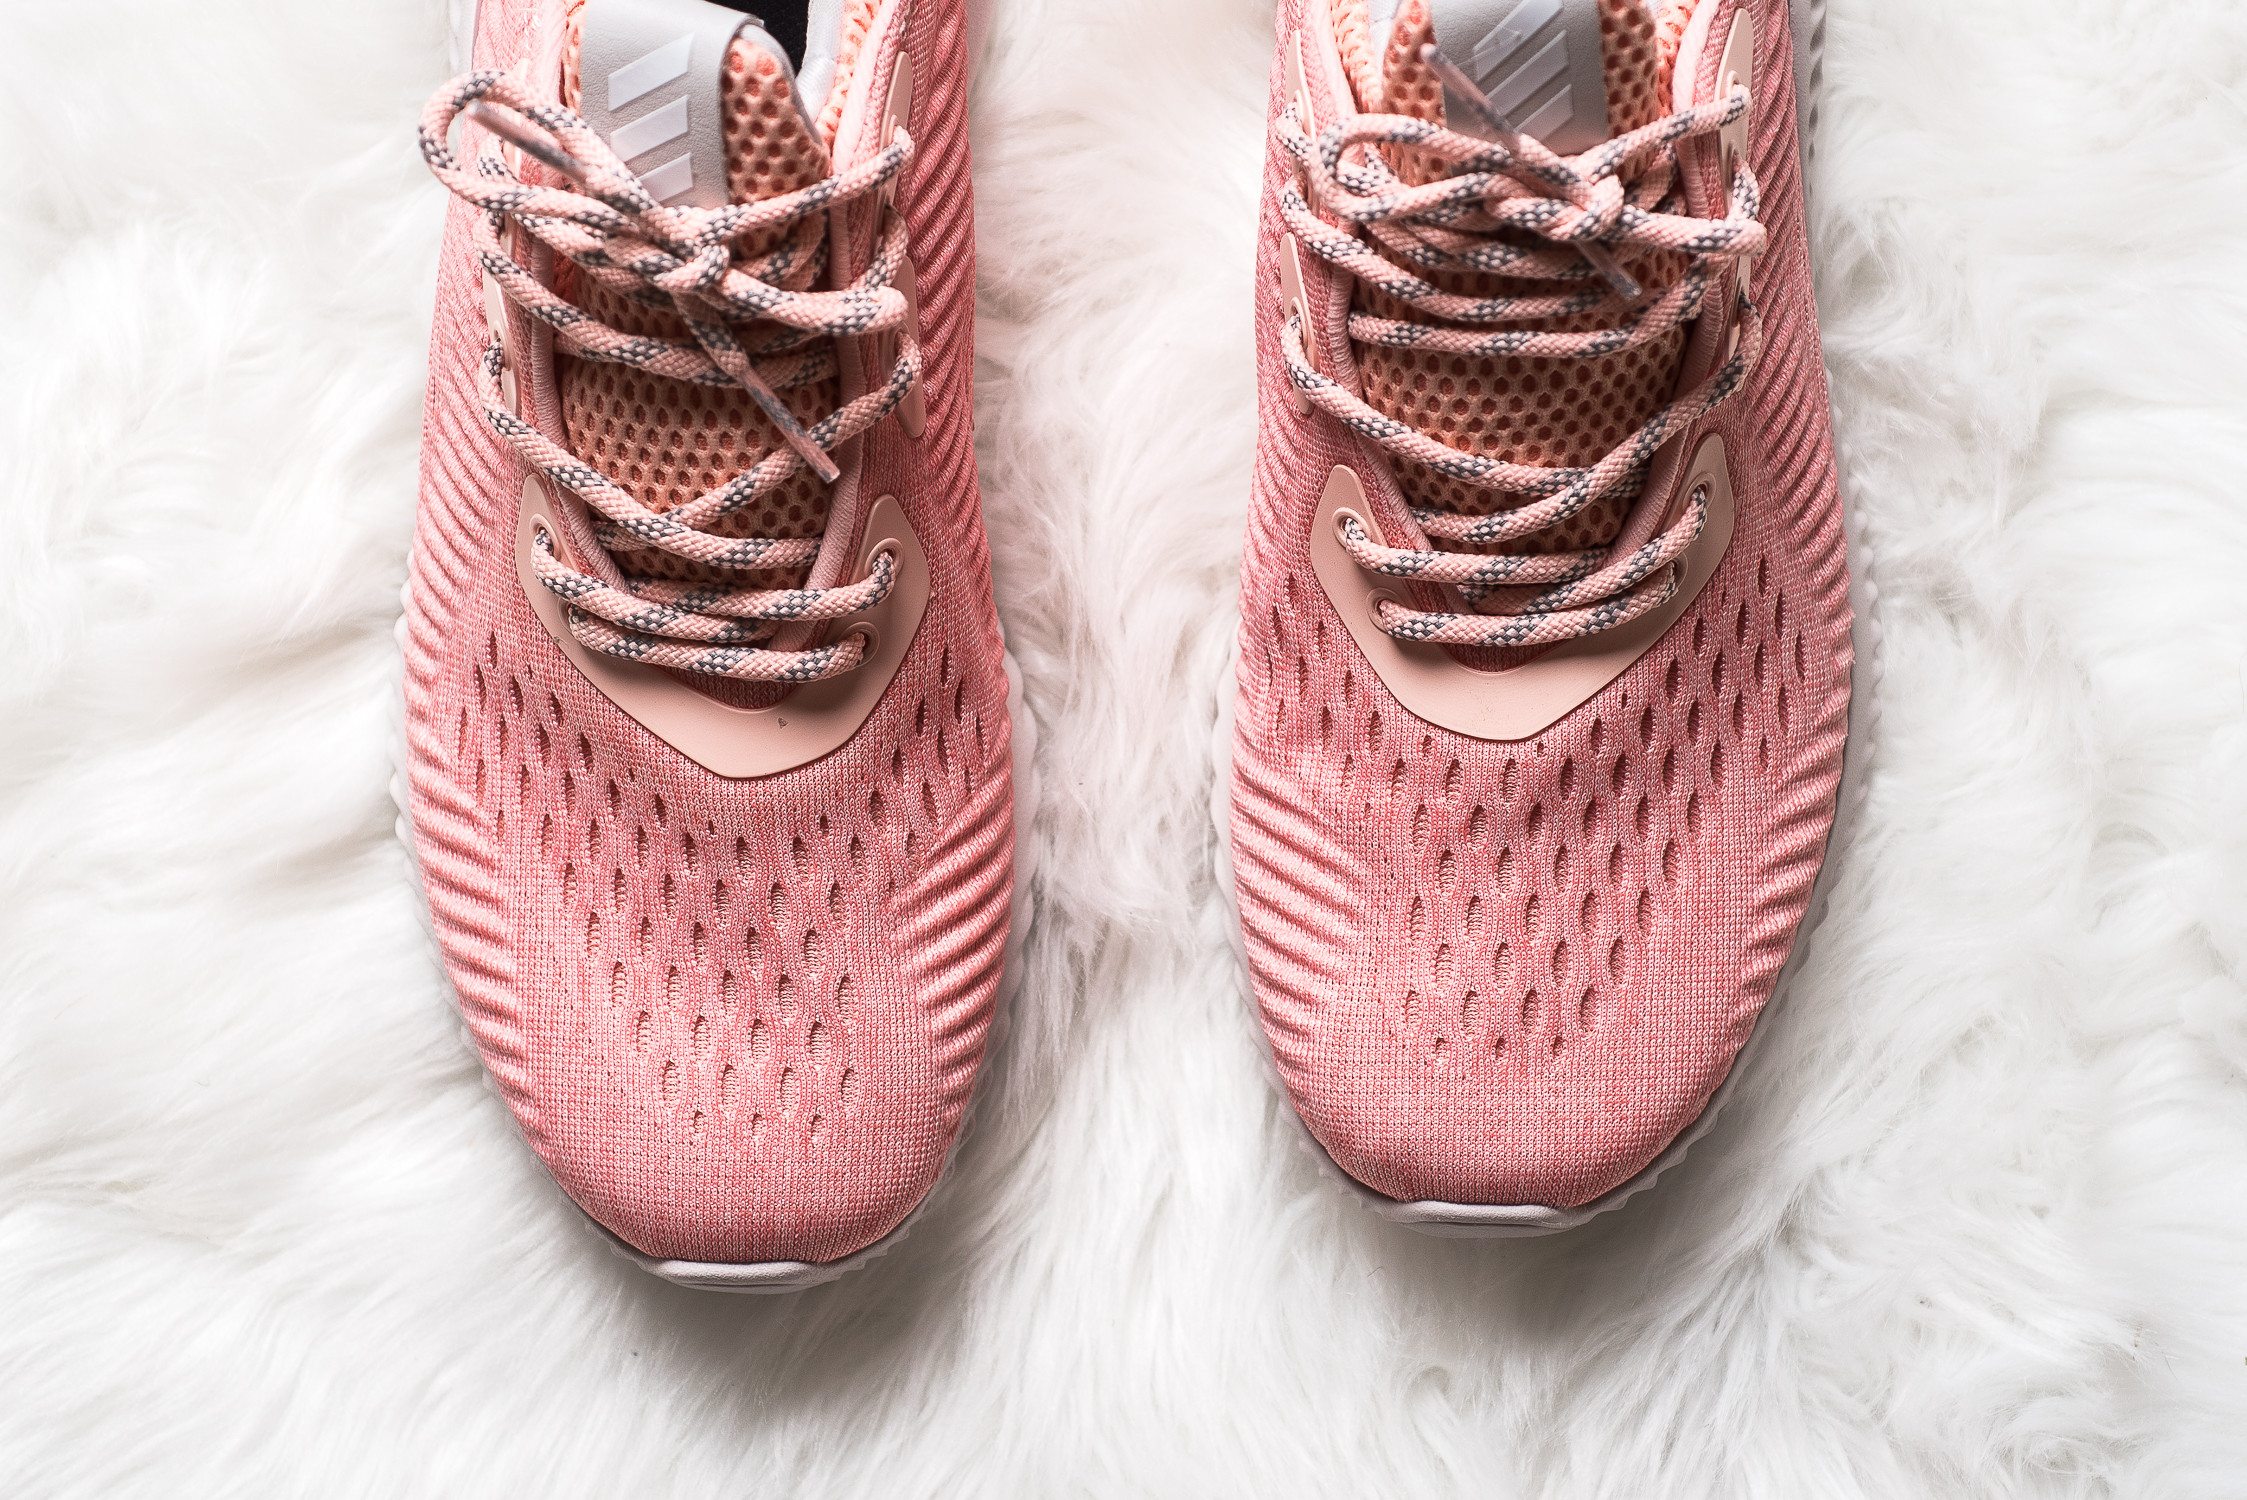 adidas AlphaBOUNCE "Pink"